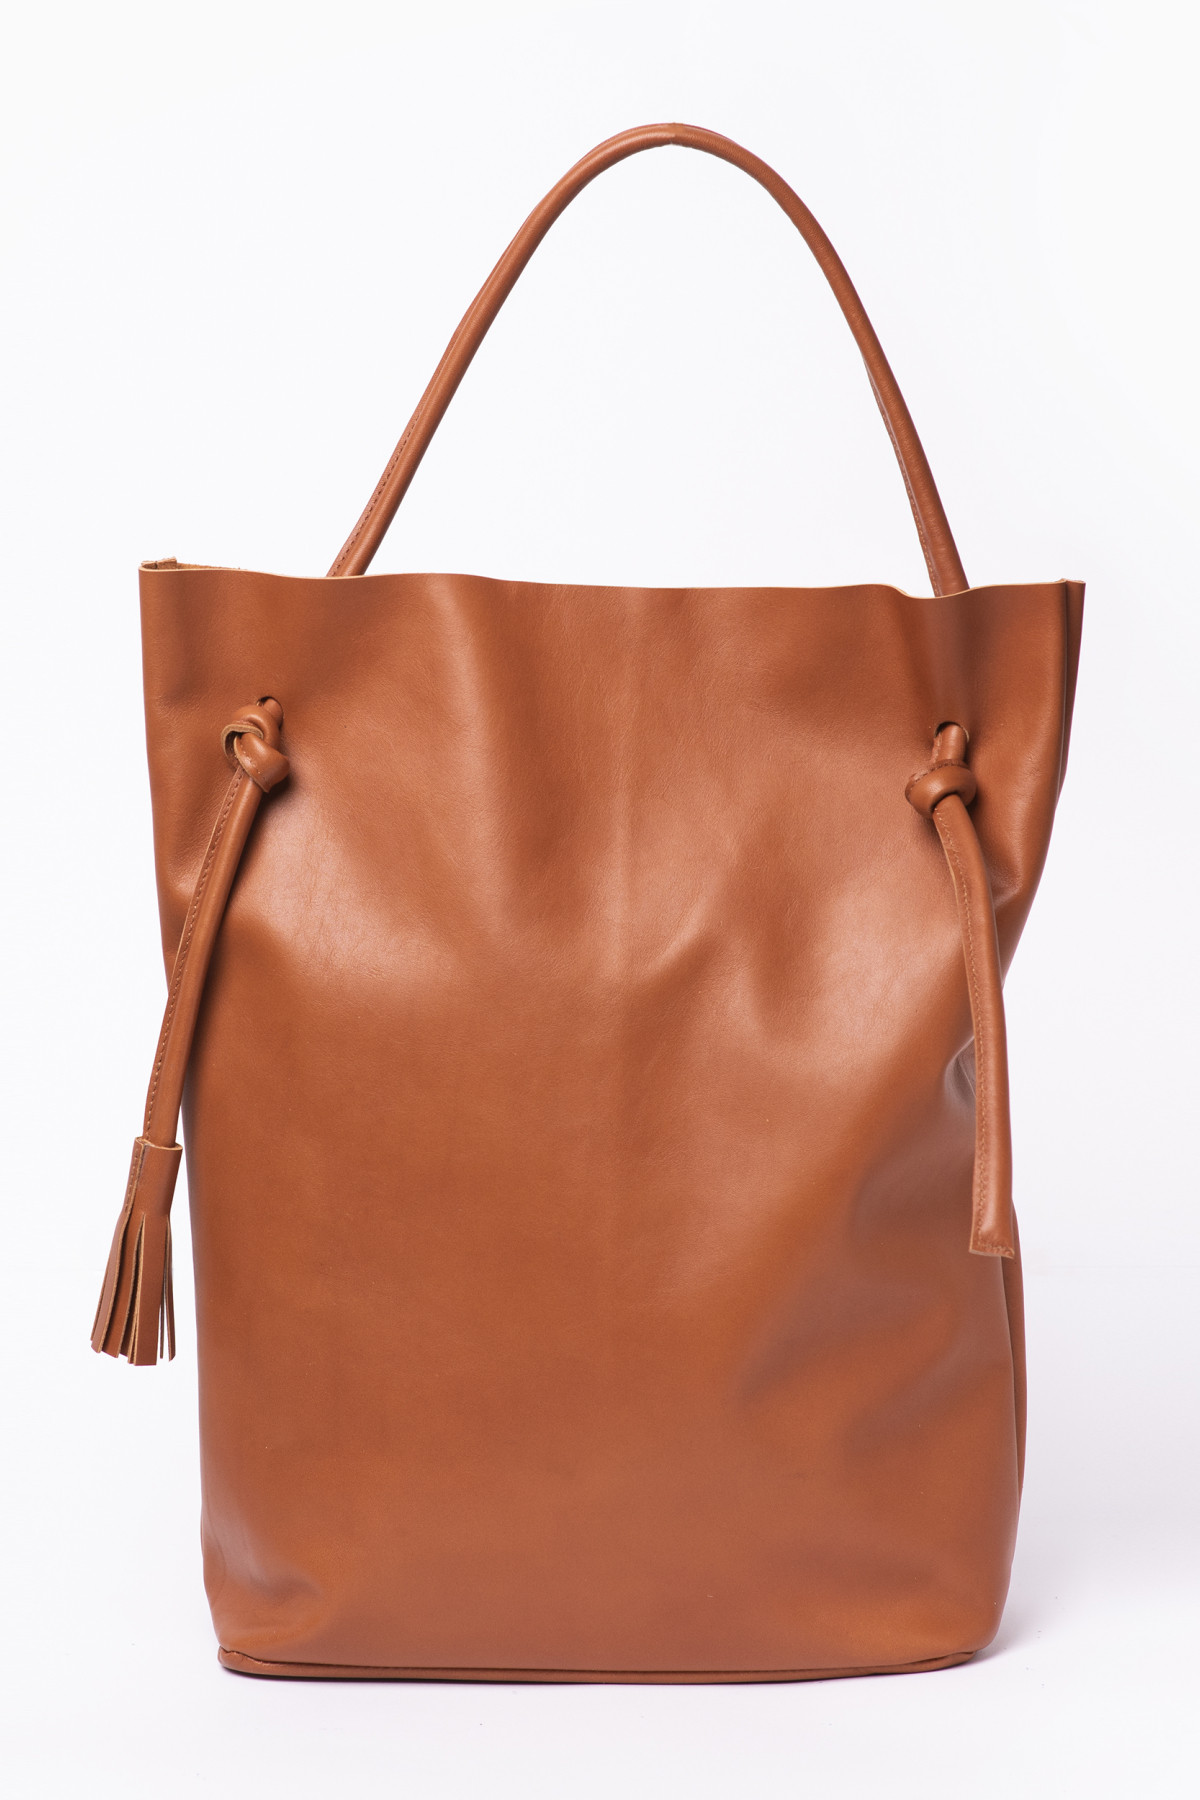 Look Made With Love Handbag 5552 Paris Camel OS